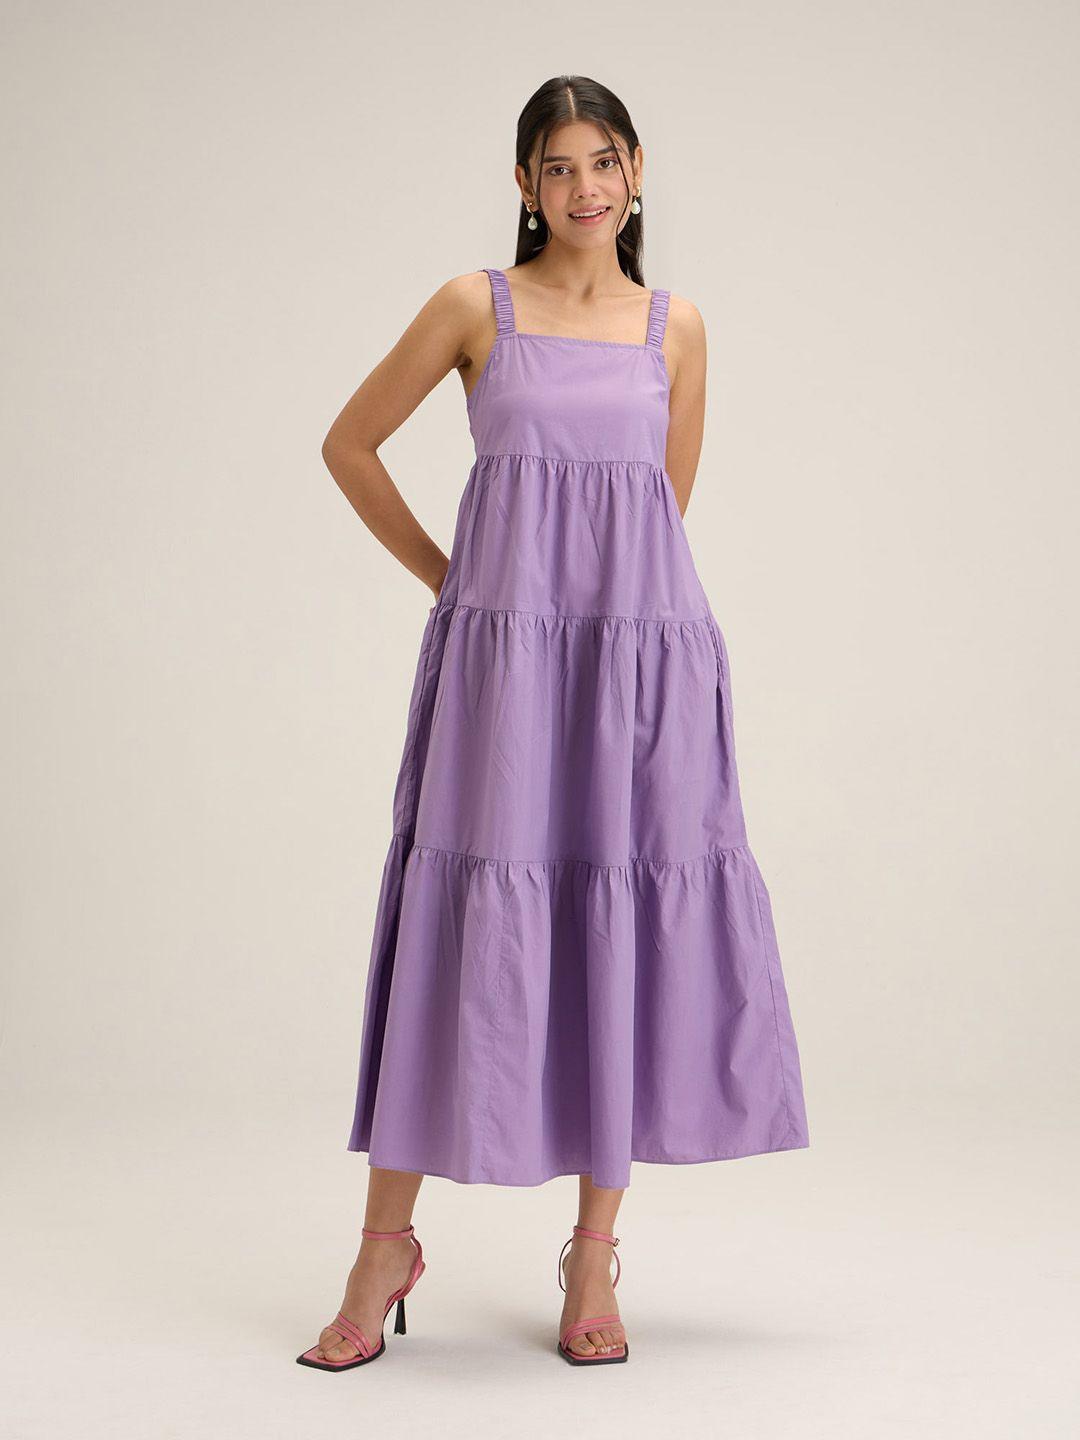 20dresses lavender cotton empire midi dress